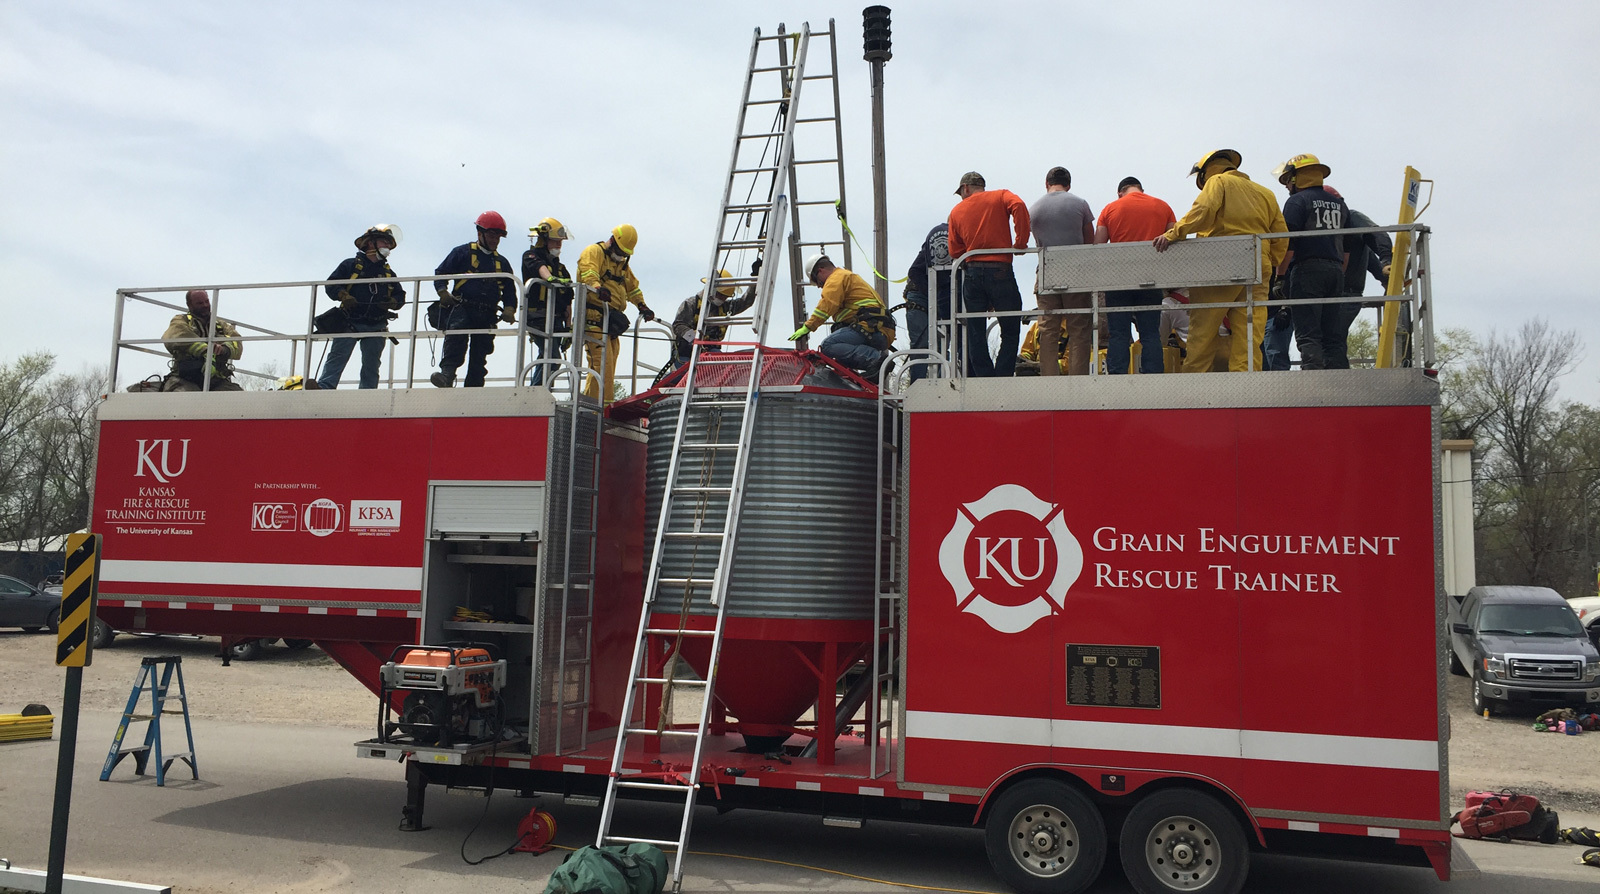 Firefighters train on KFRTI's Grain Engulfment Rescue Trainer